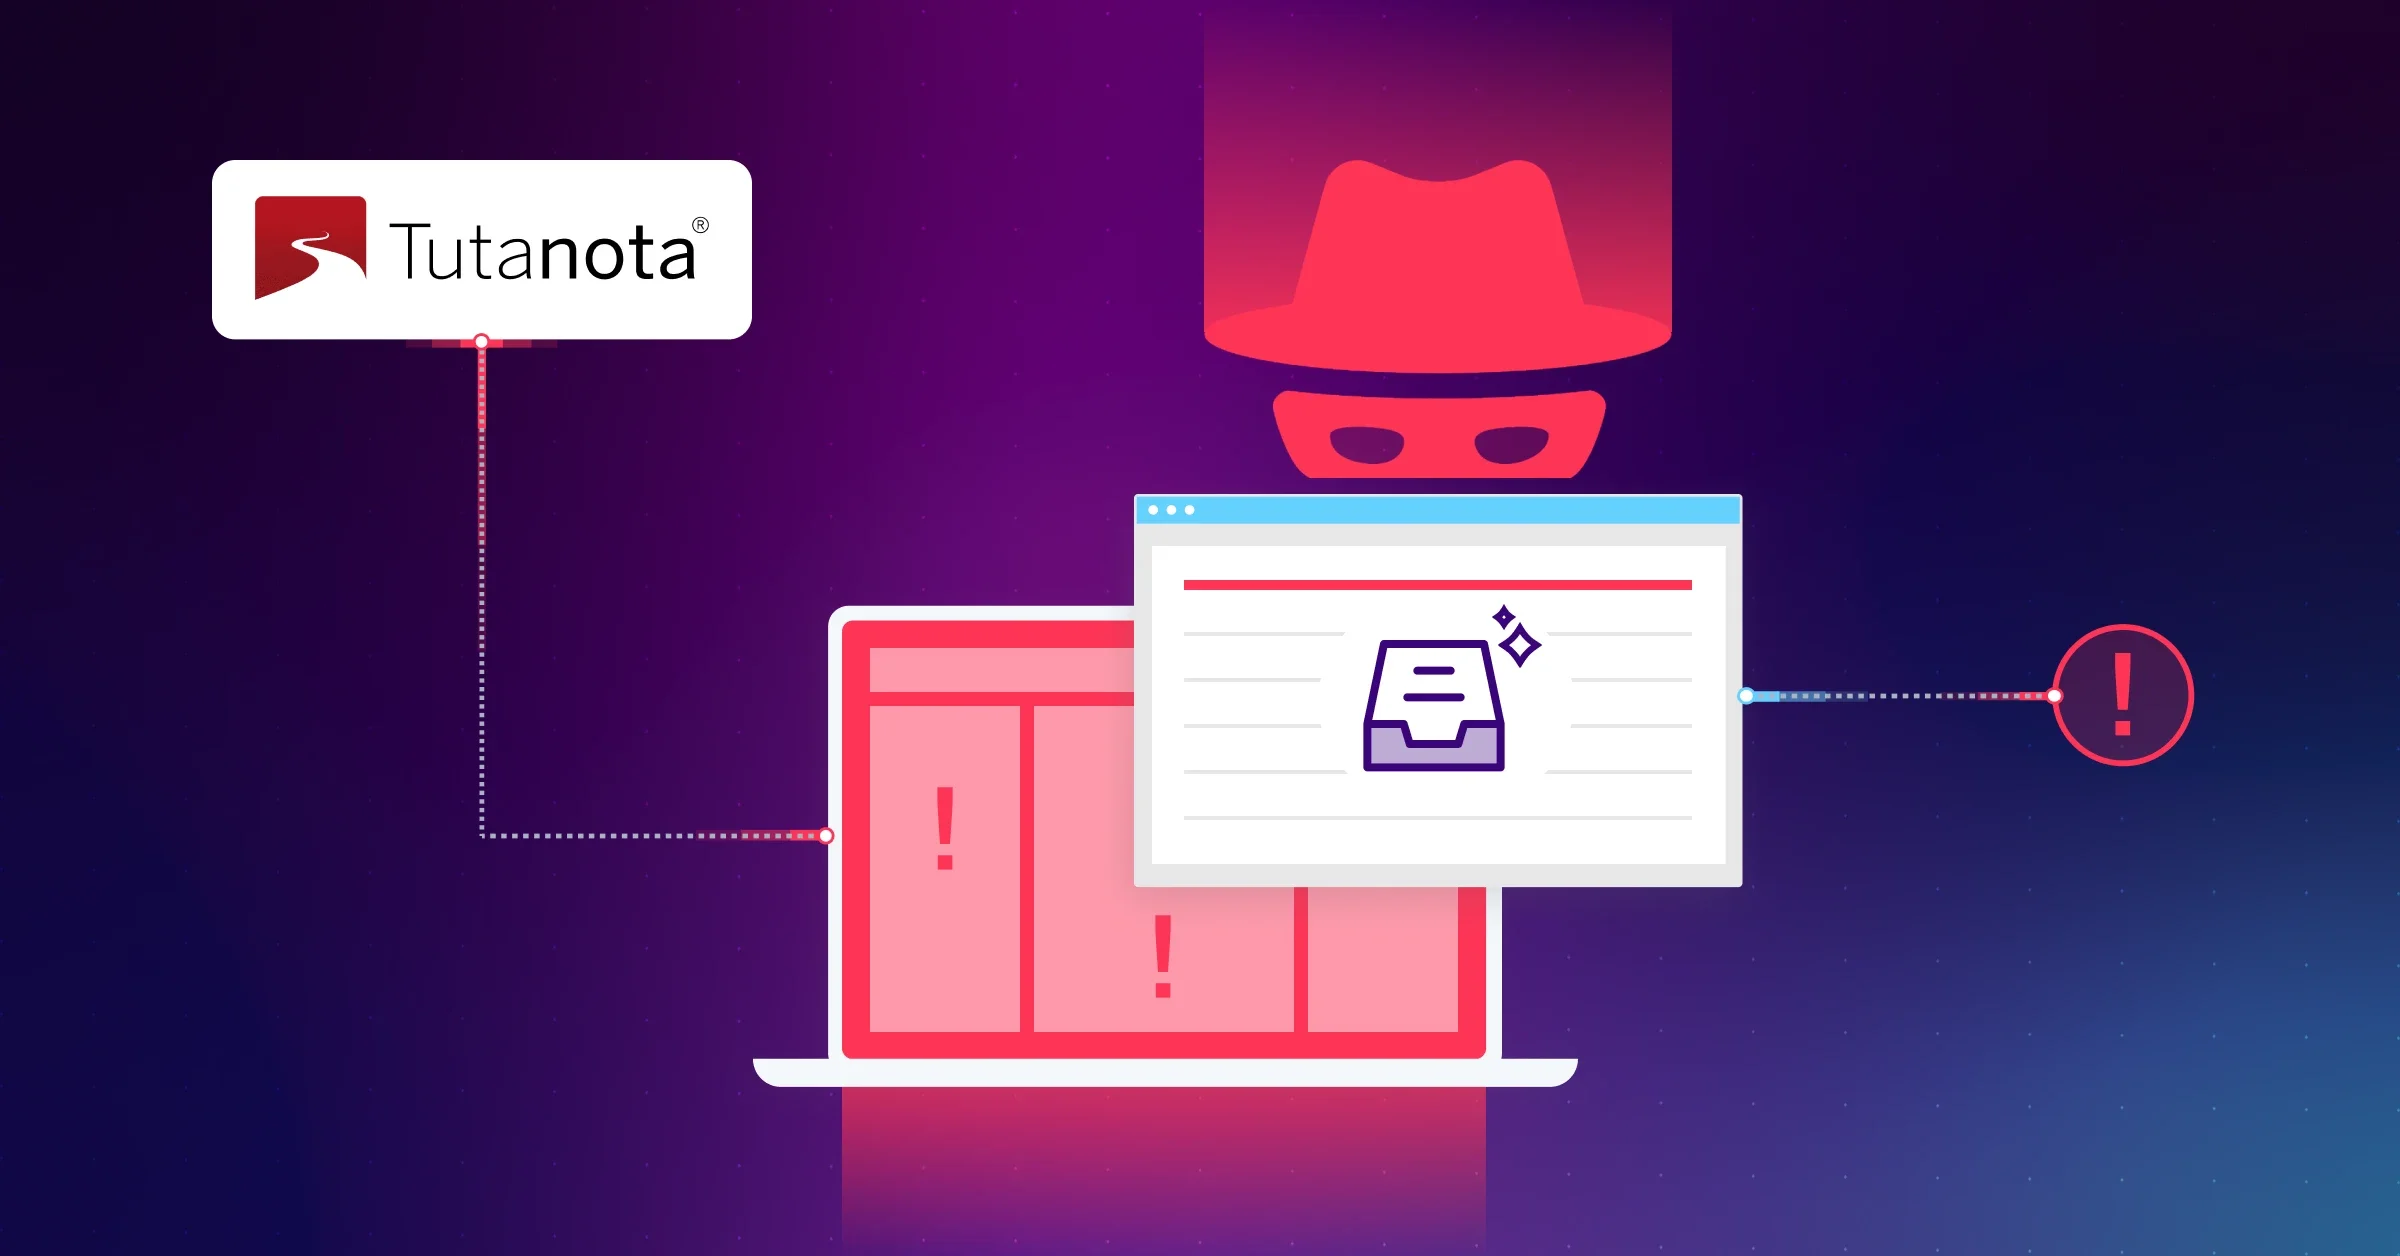 Remote Code Execution in Tutanota Desktop due to Code Flaw | Sonar